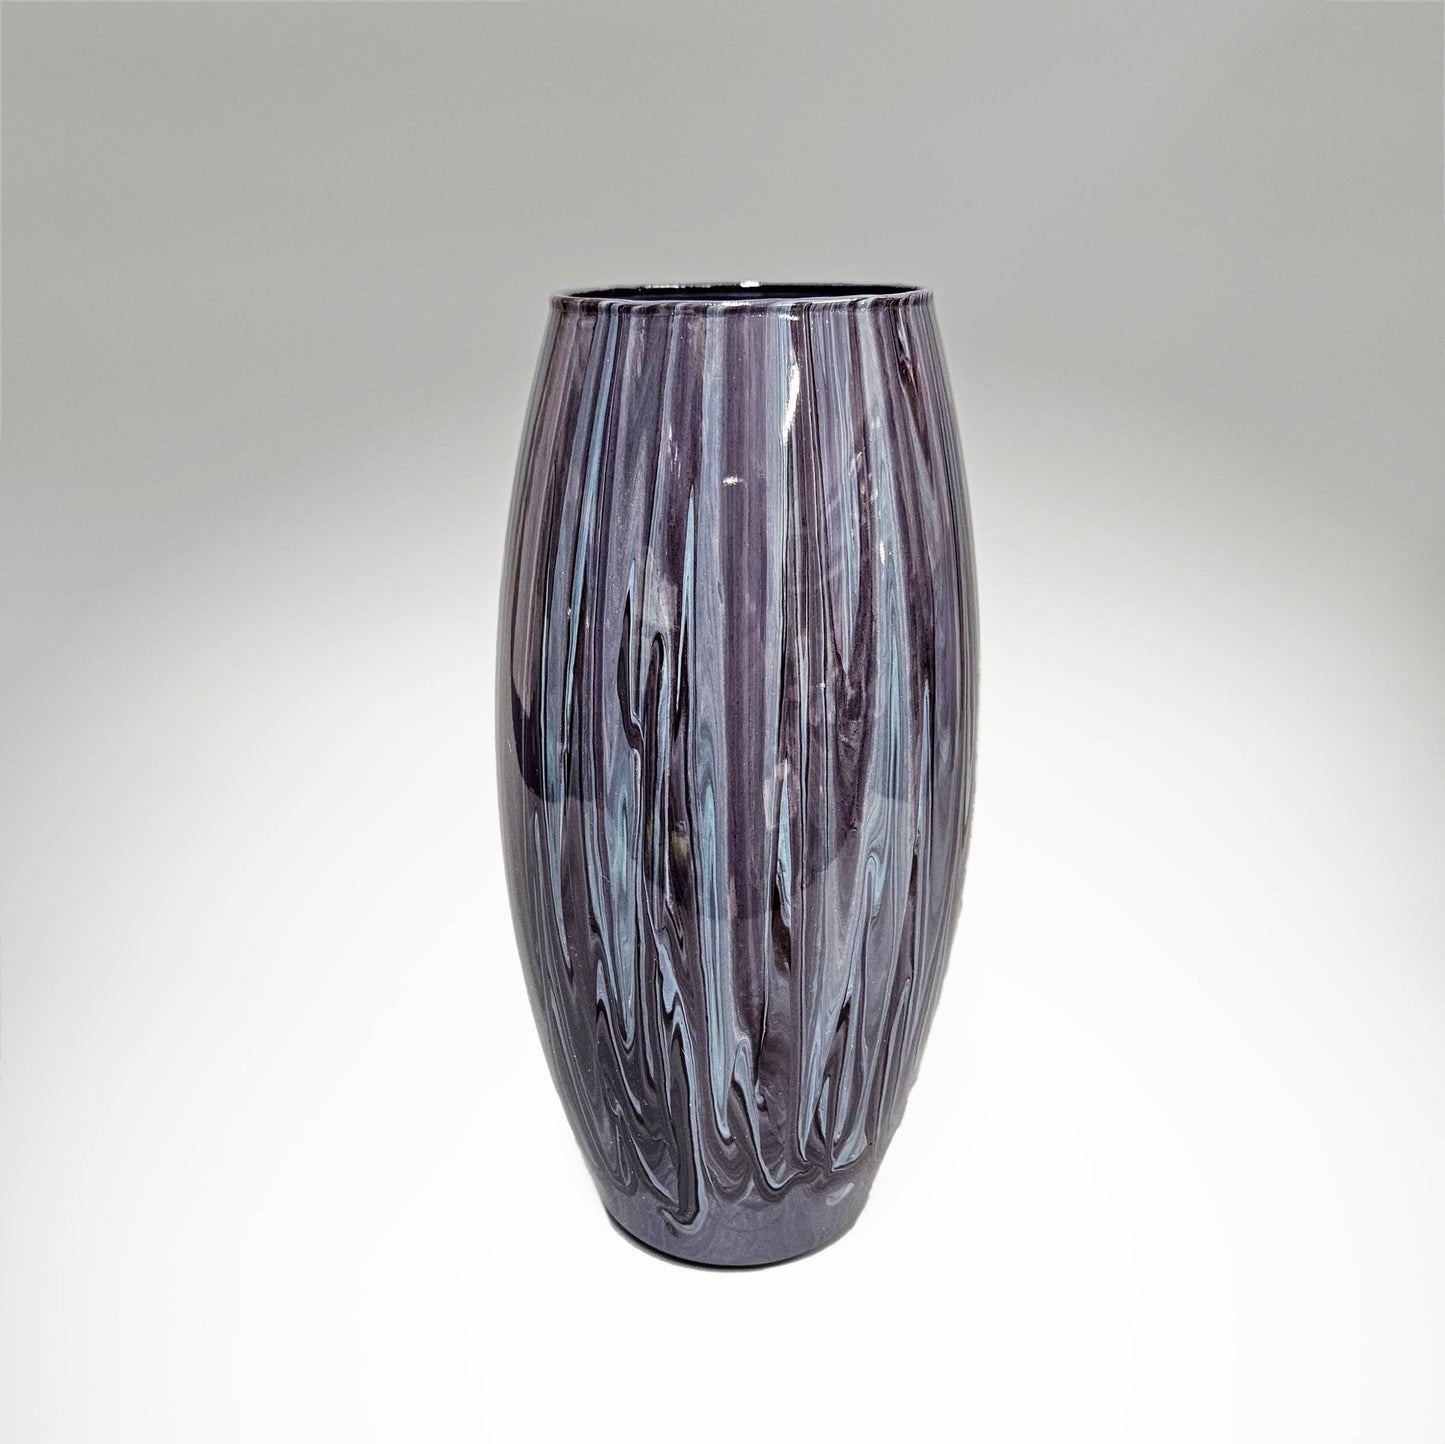 Fluid Art Vase in Black Purple Gray